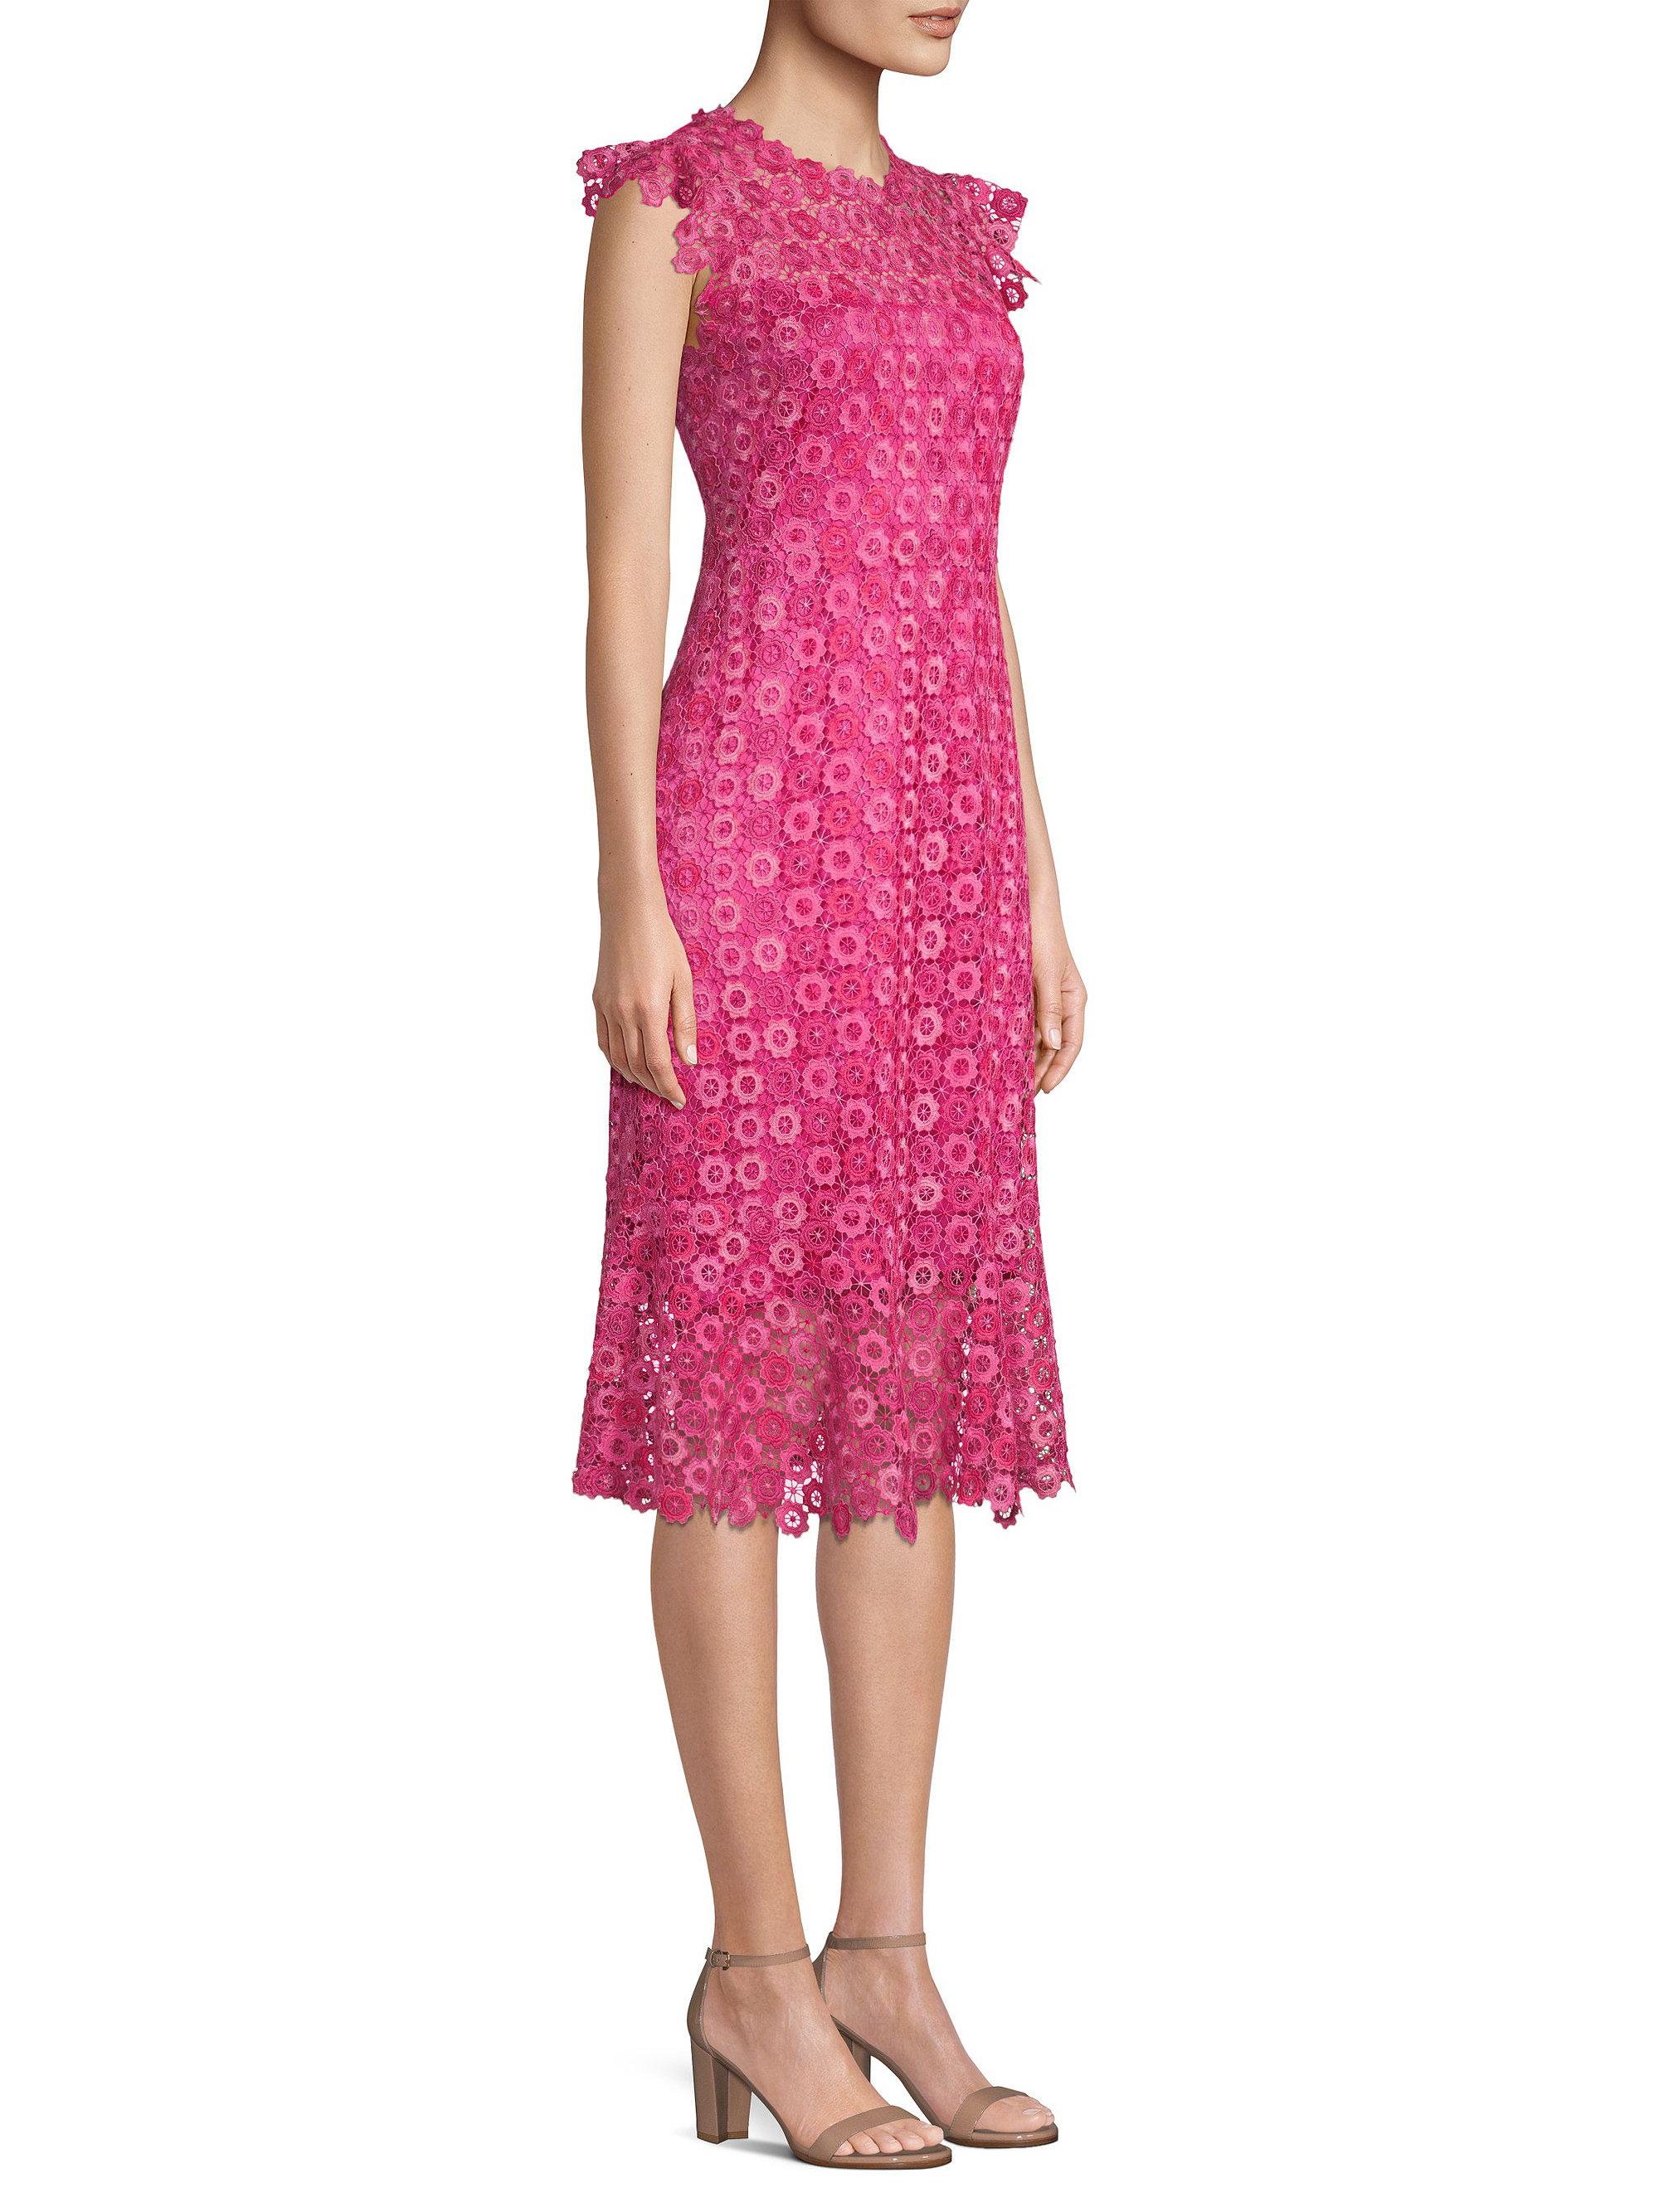 tahari pink dress